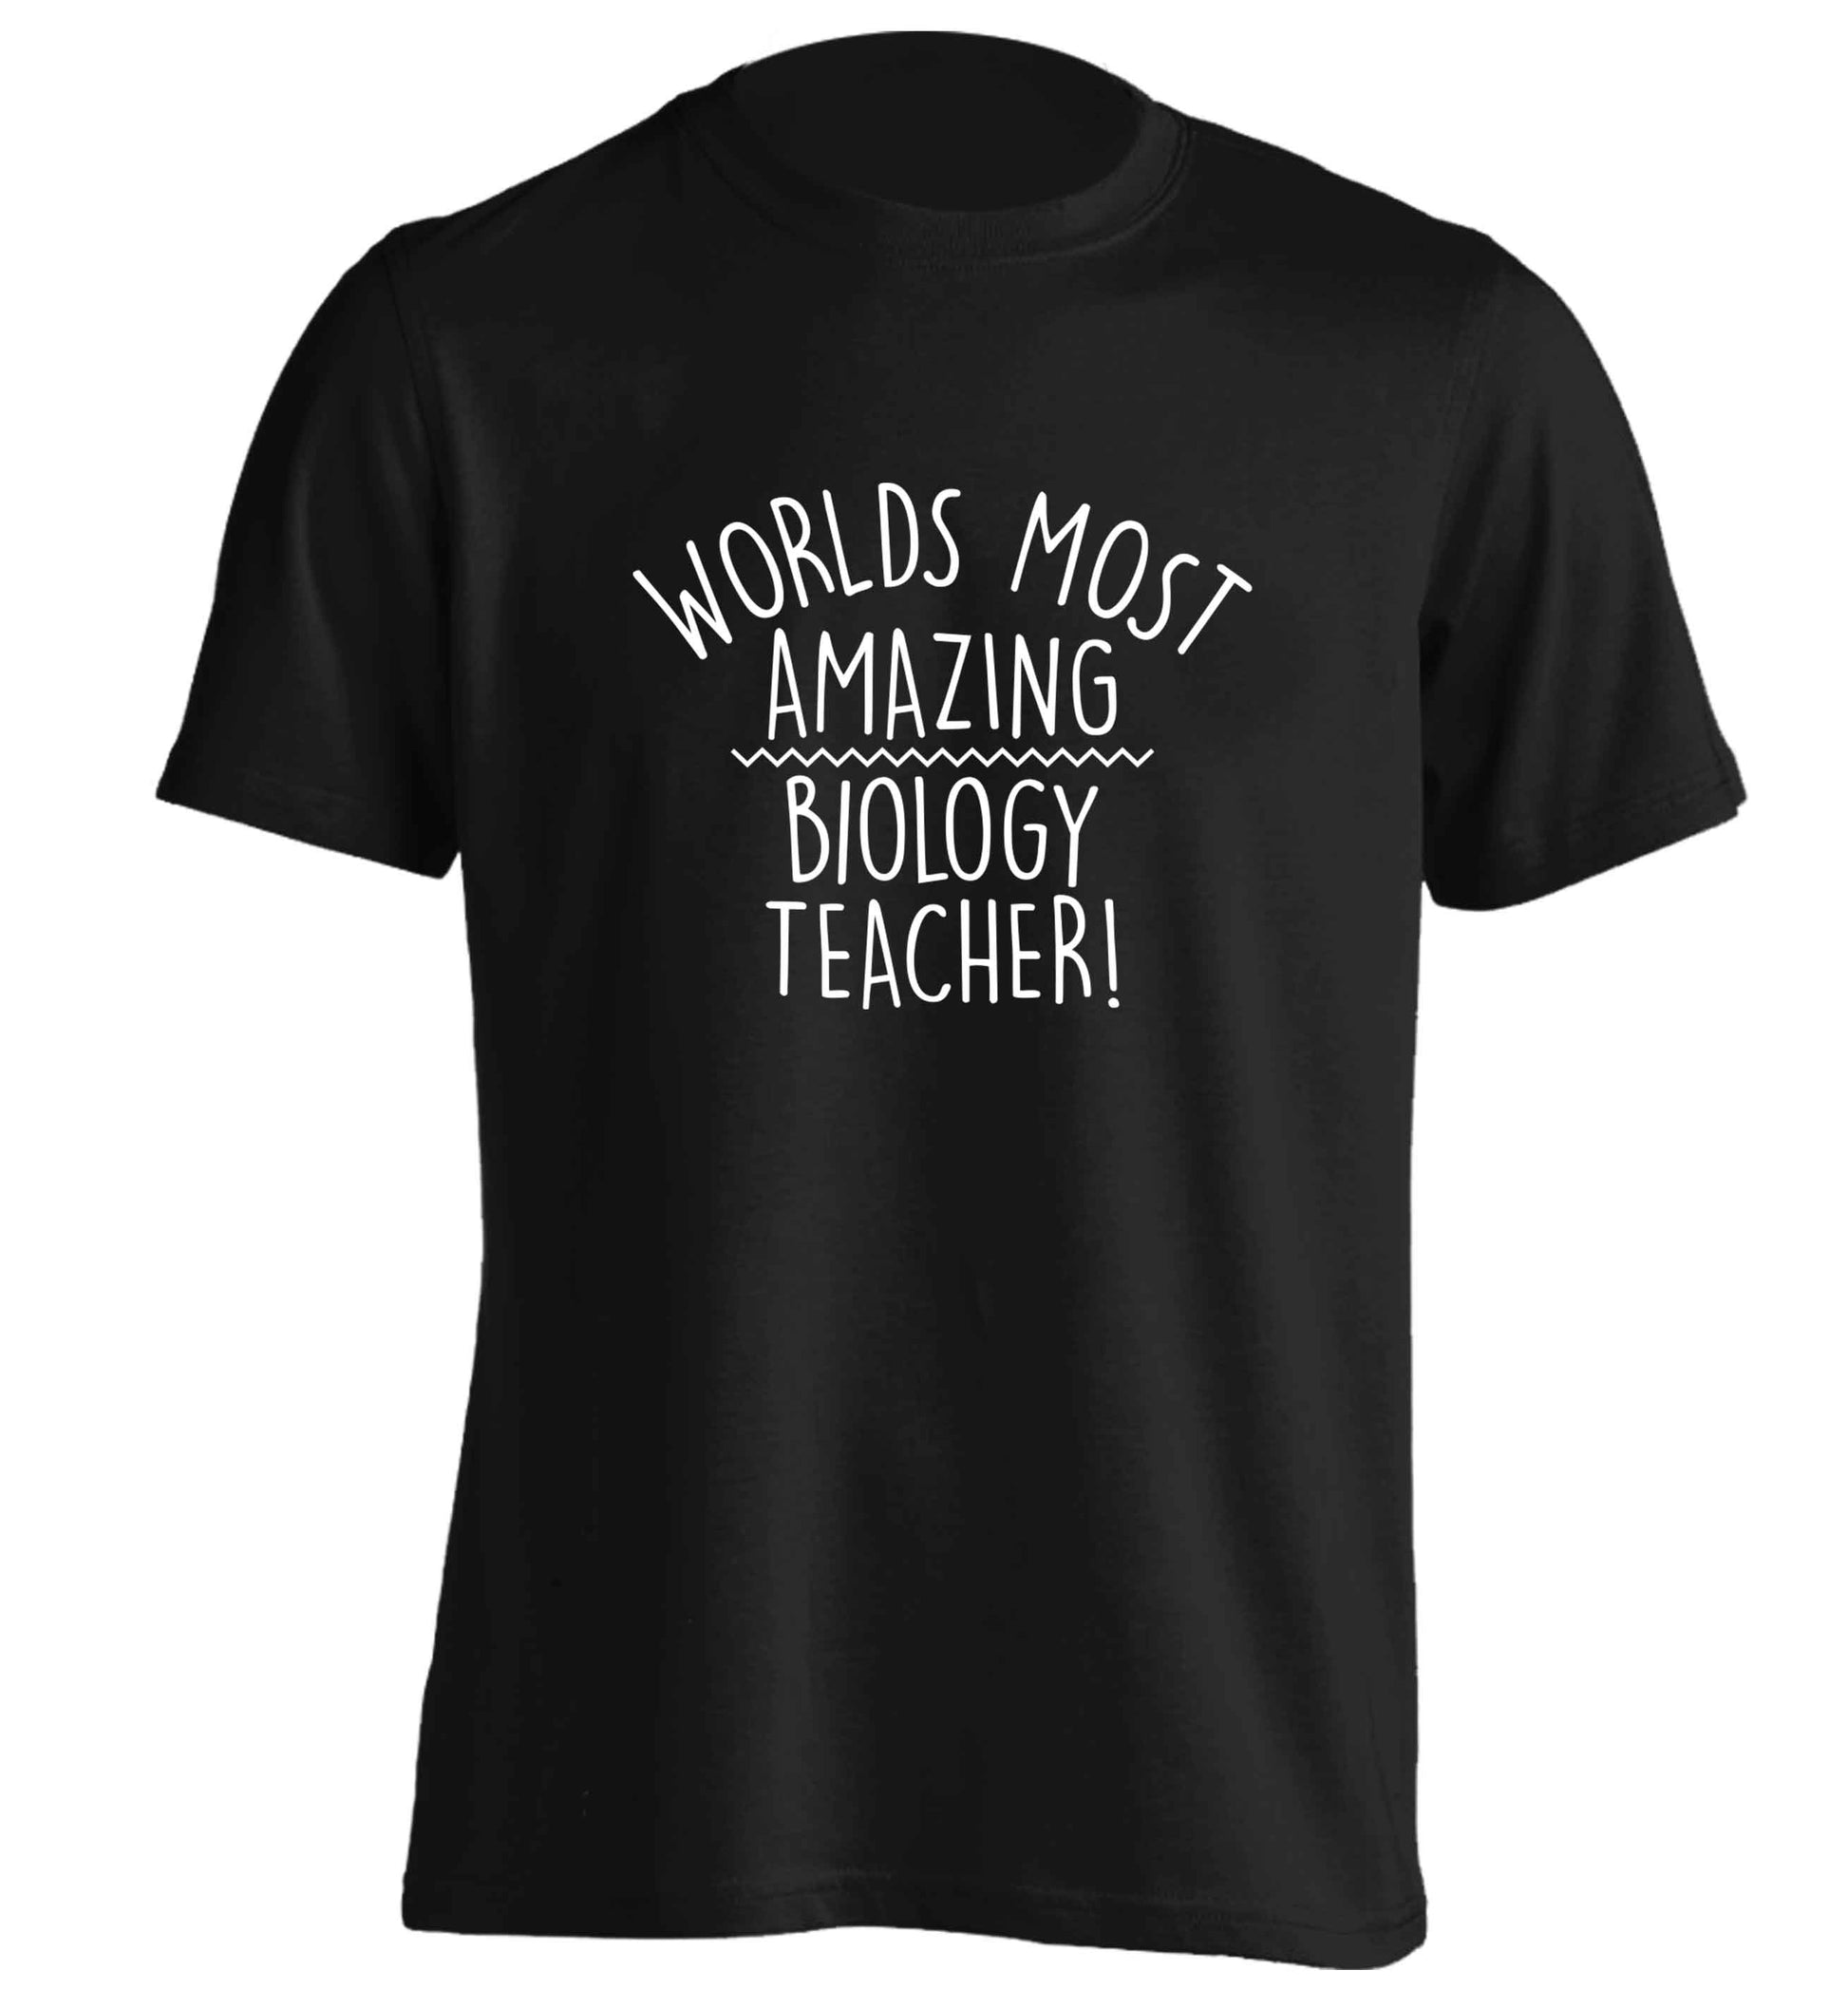 Worlds most amazing biology teacher adults unisex black Tshirt 2XL